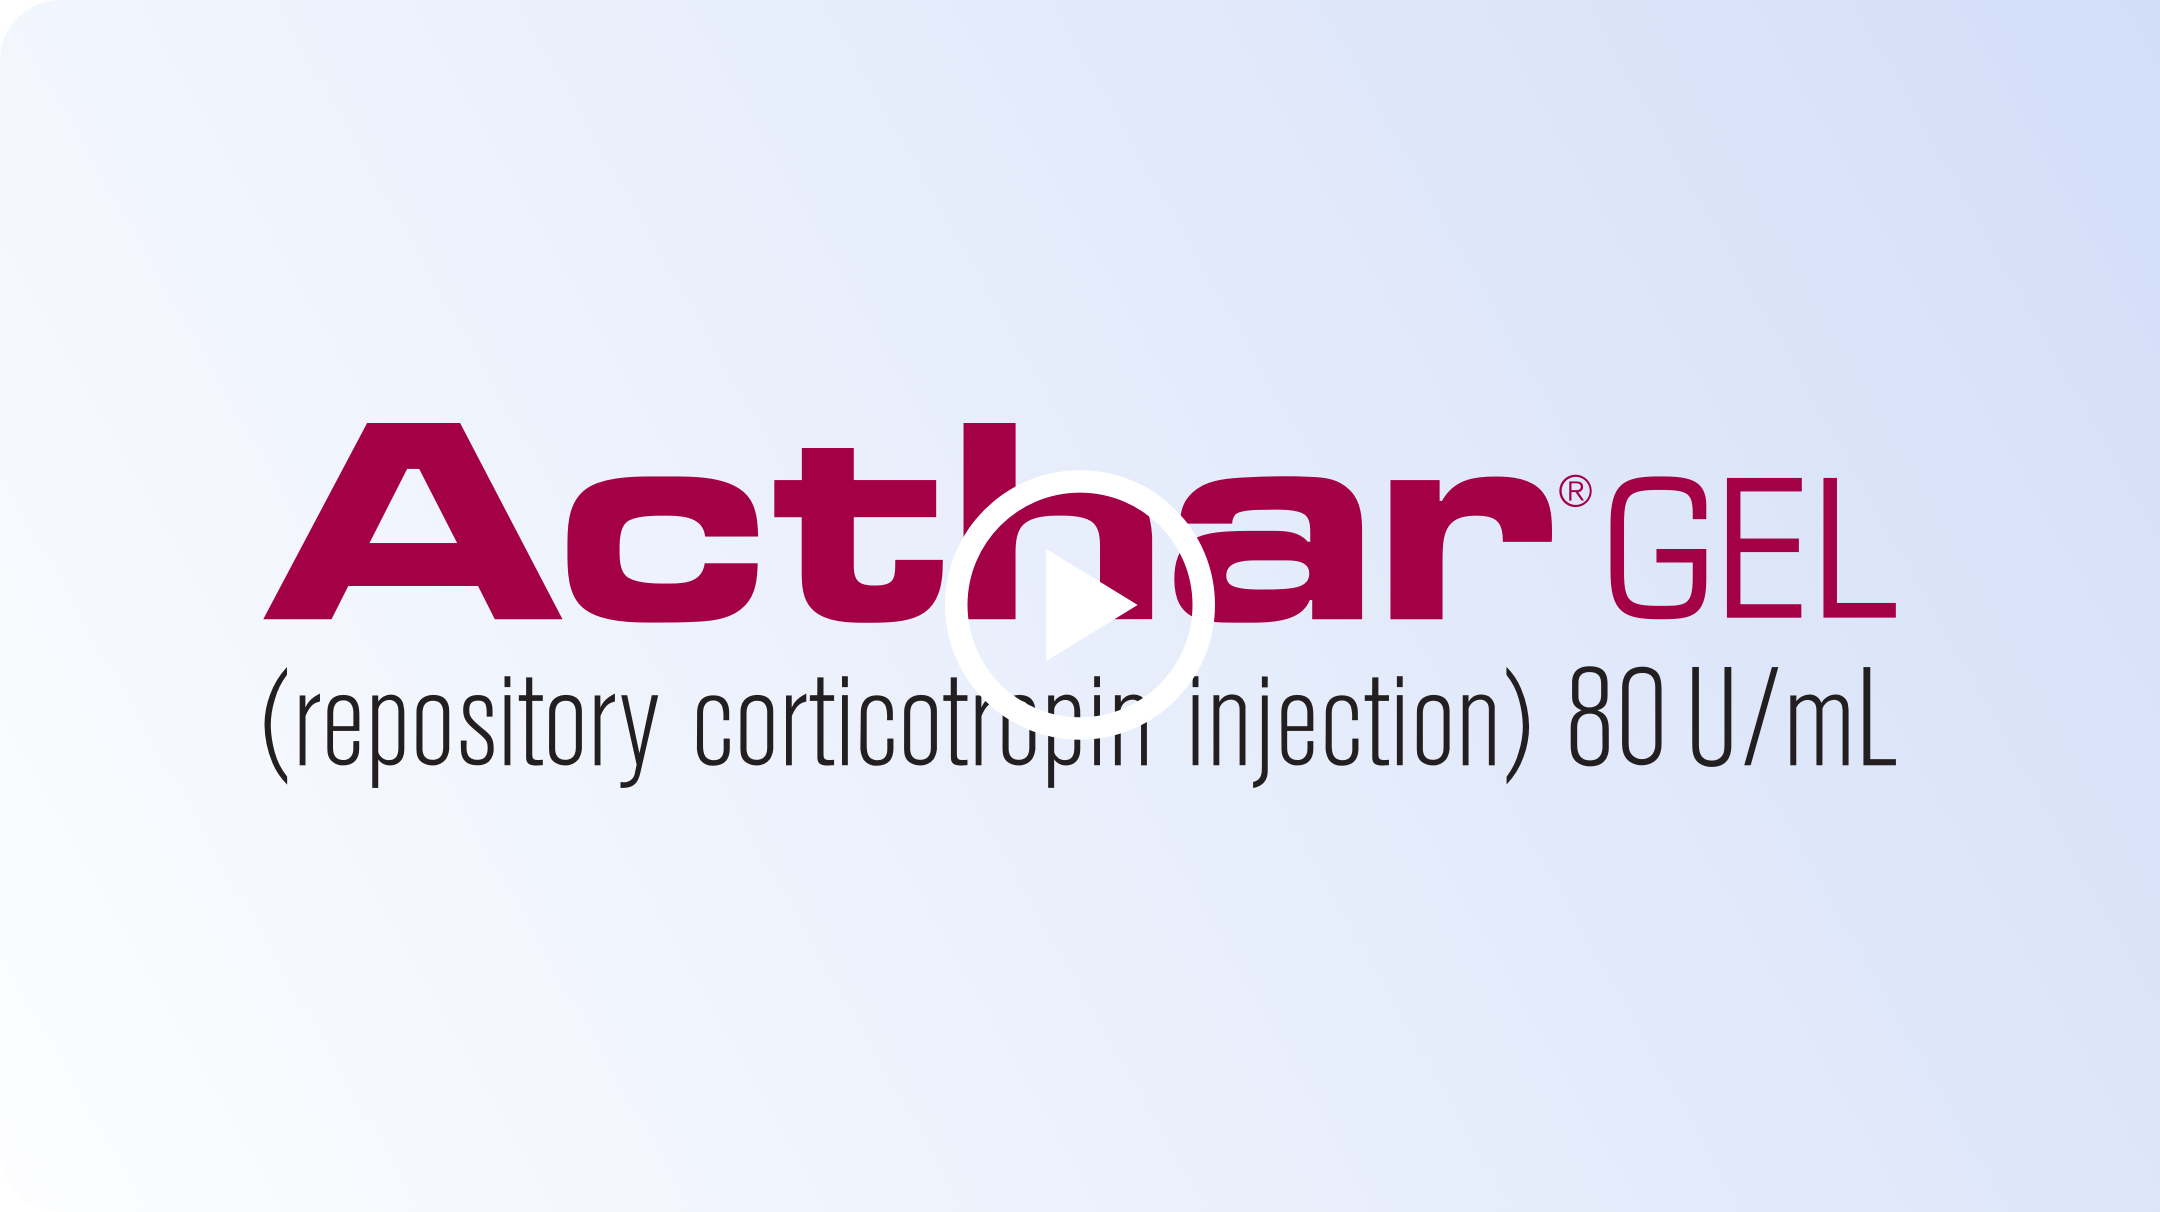 Acthar Gel patient: [Patient name] shares [patient pronoun]
      experience of taking Acthar Gel